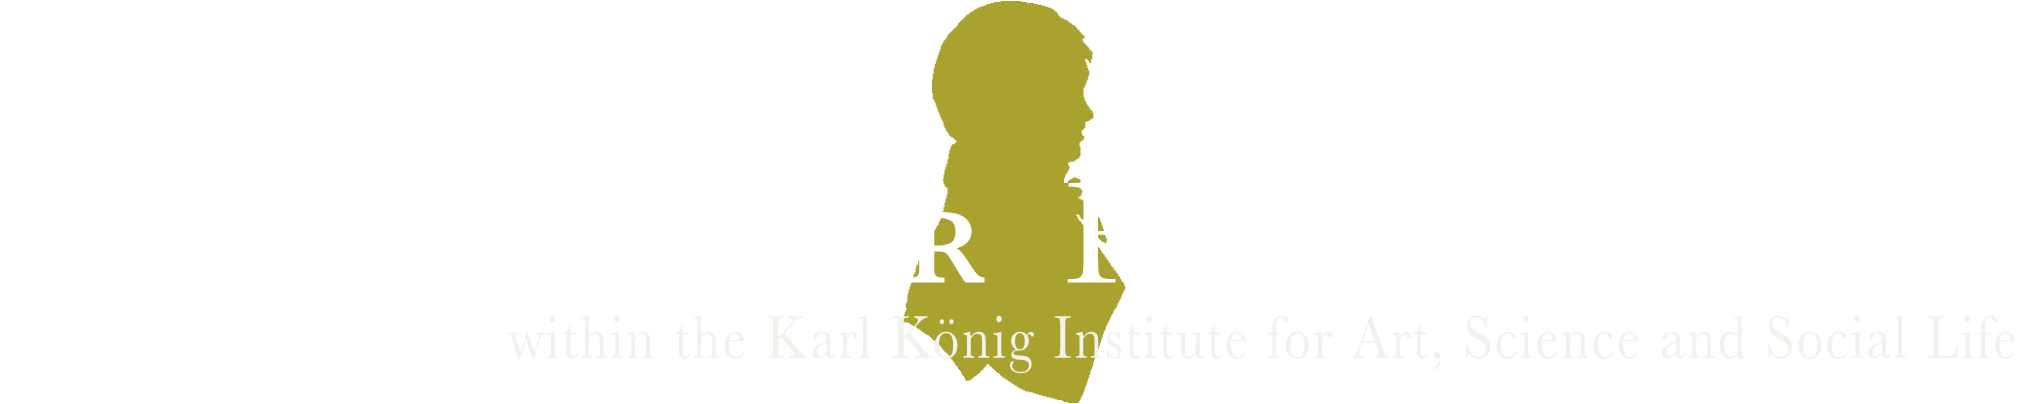 Kaspar Hauser Research Circle